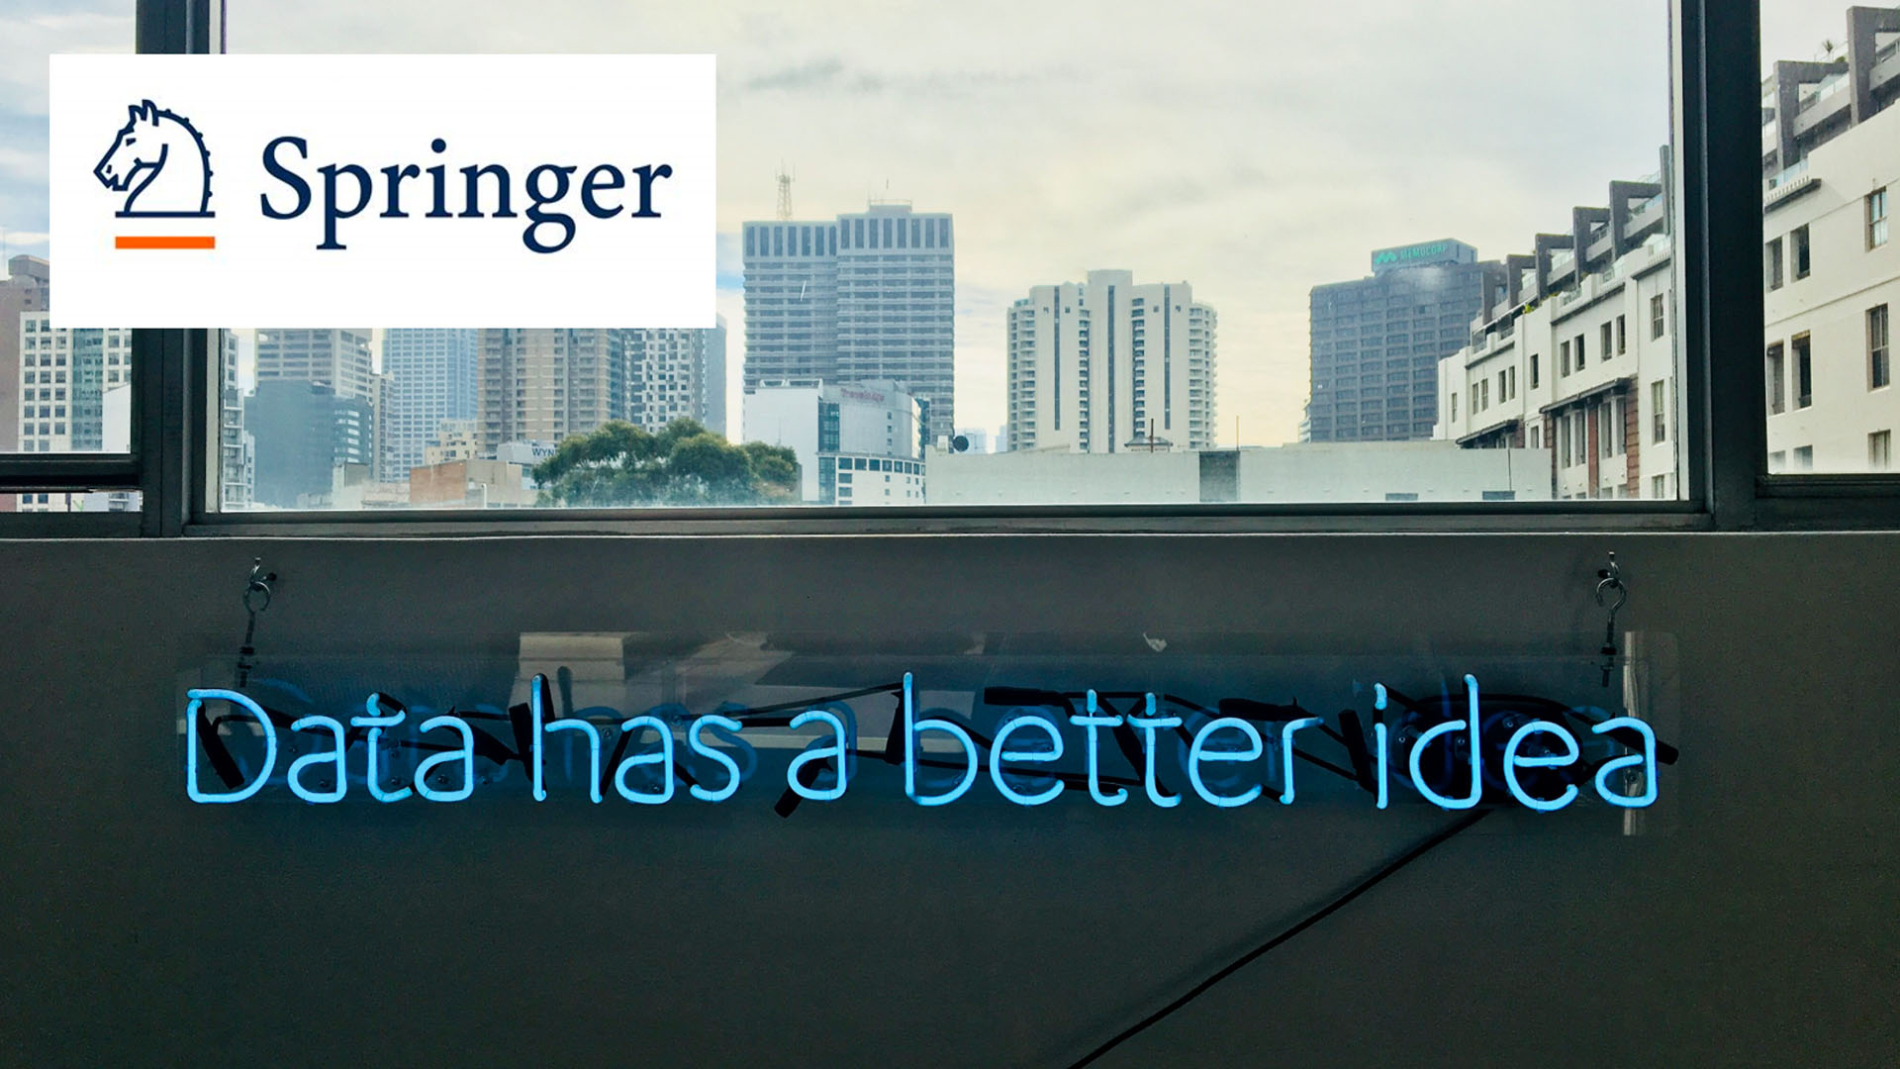 Springer - Data has a better idea